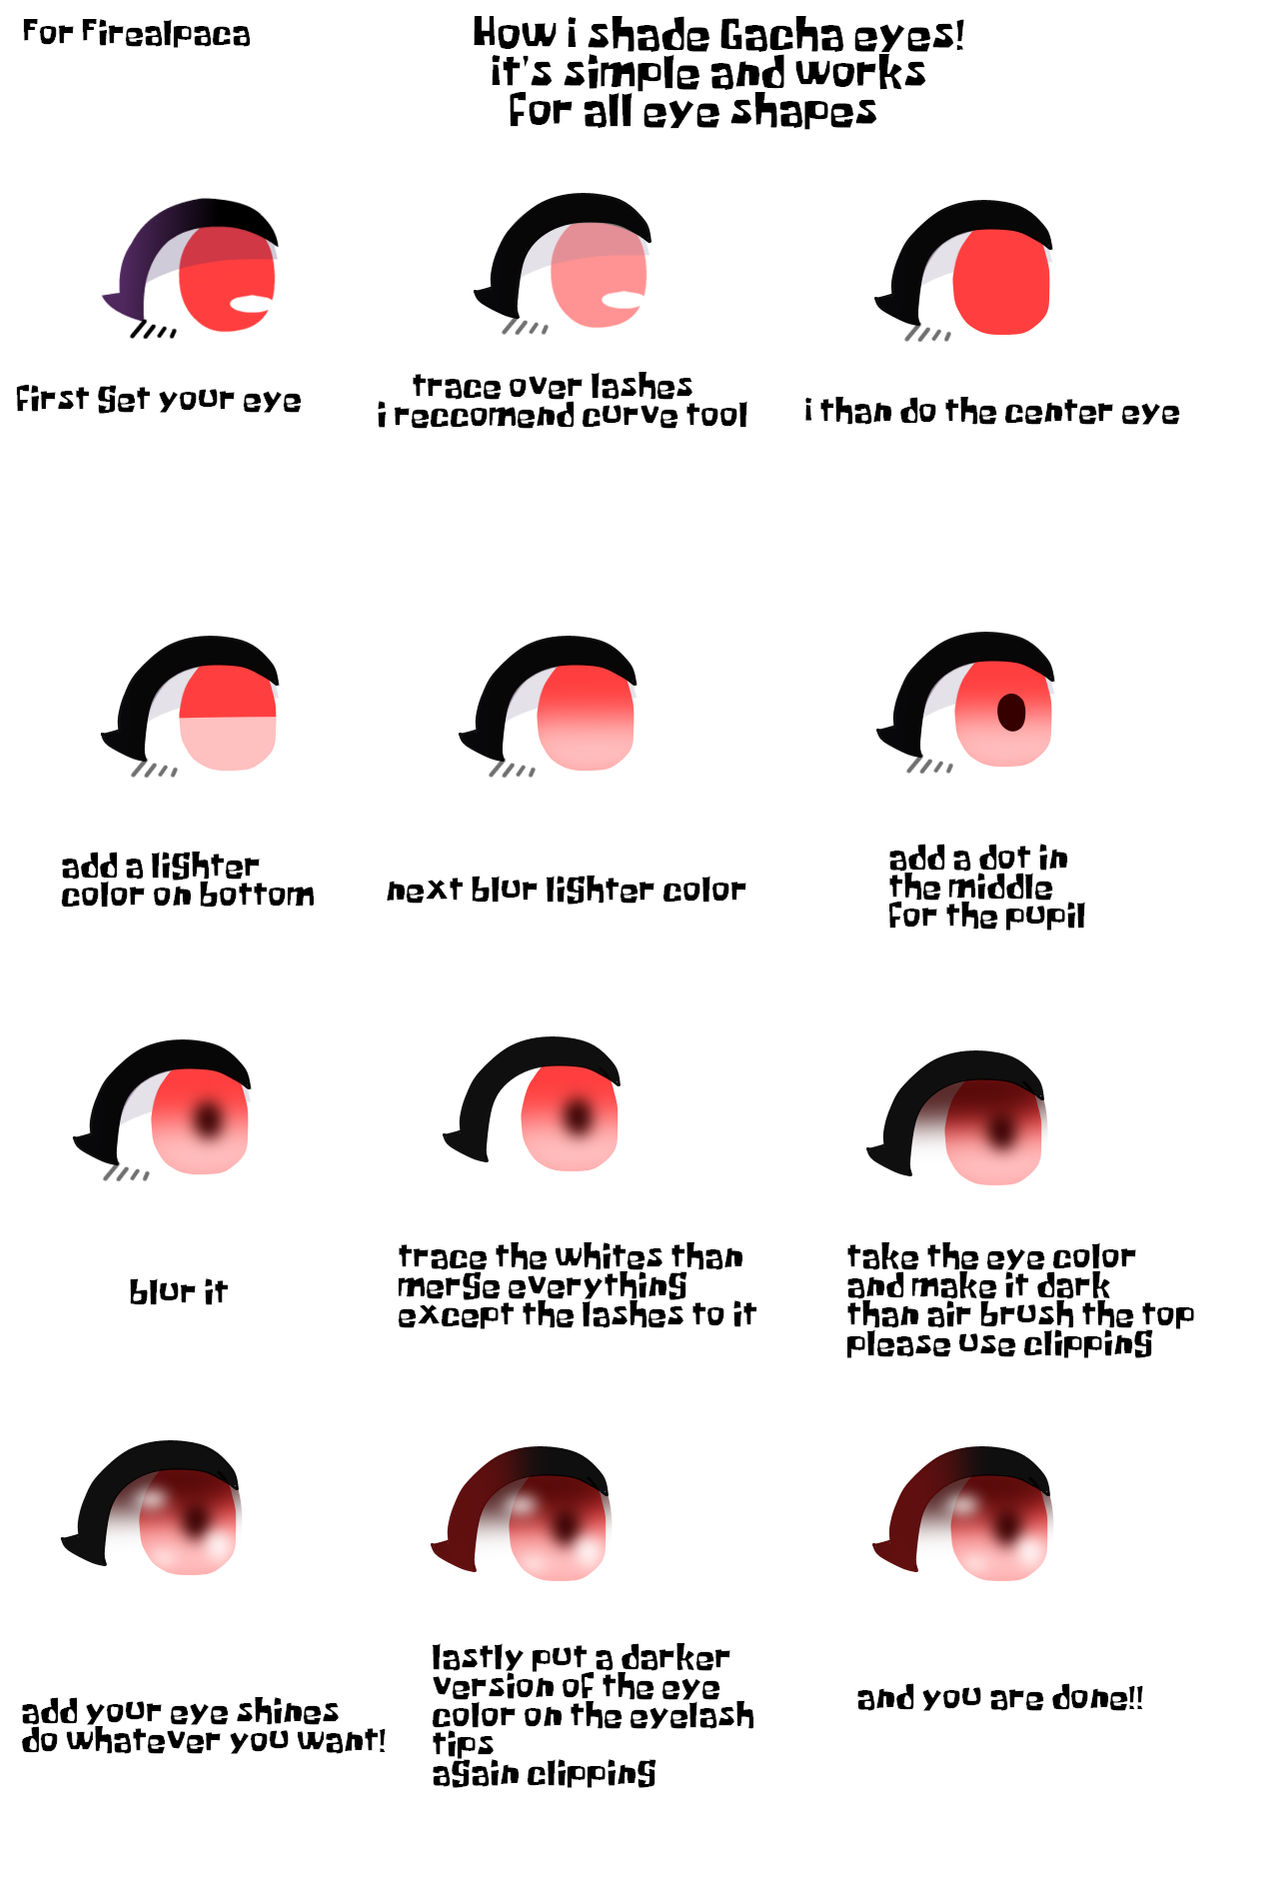 How to Make Gacha Eyes: A Simple Tutorial